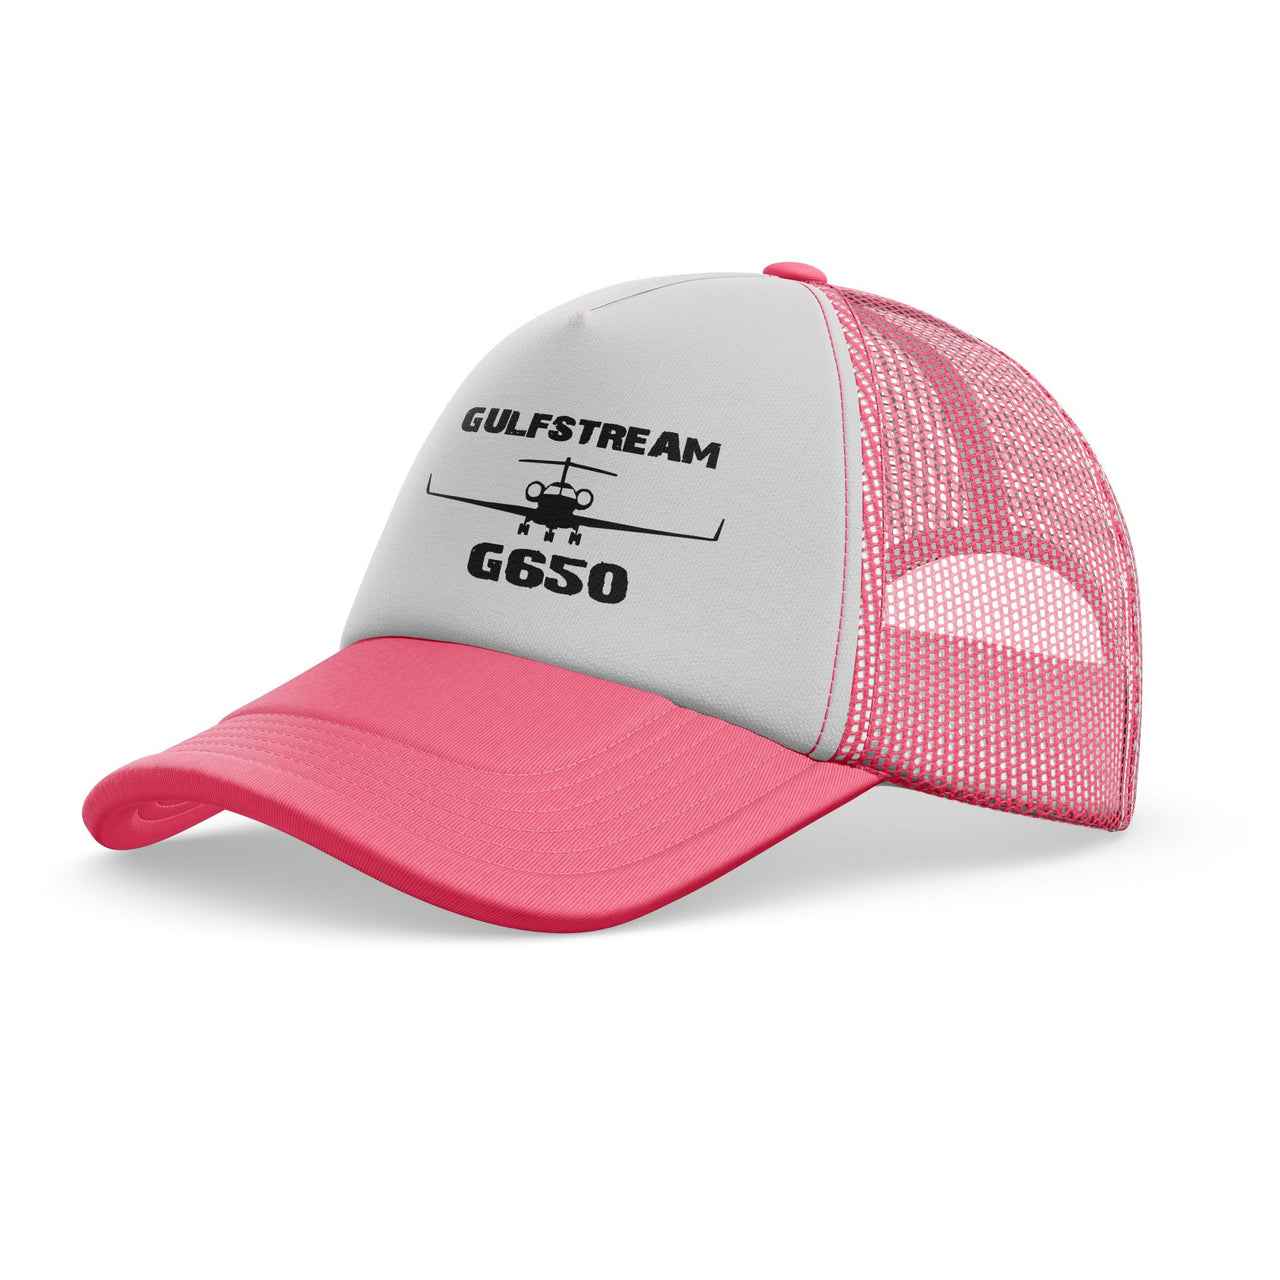 Gulfstream G650 & Plane Designed Trucker Caps & Hats